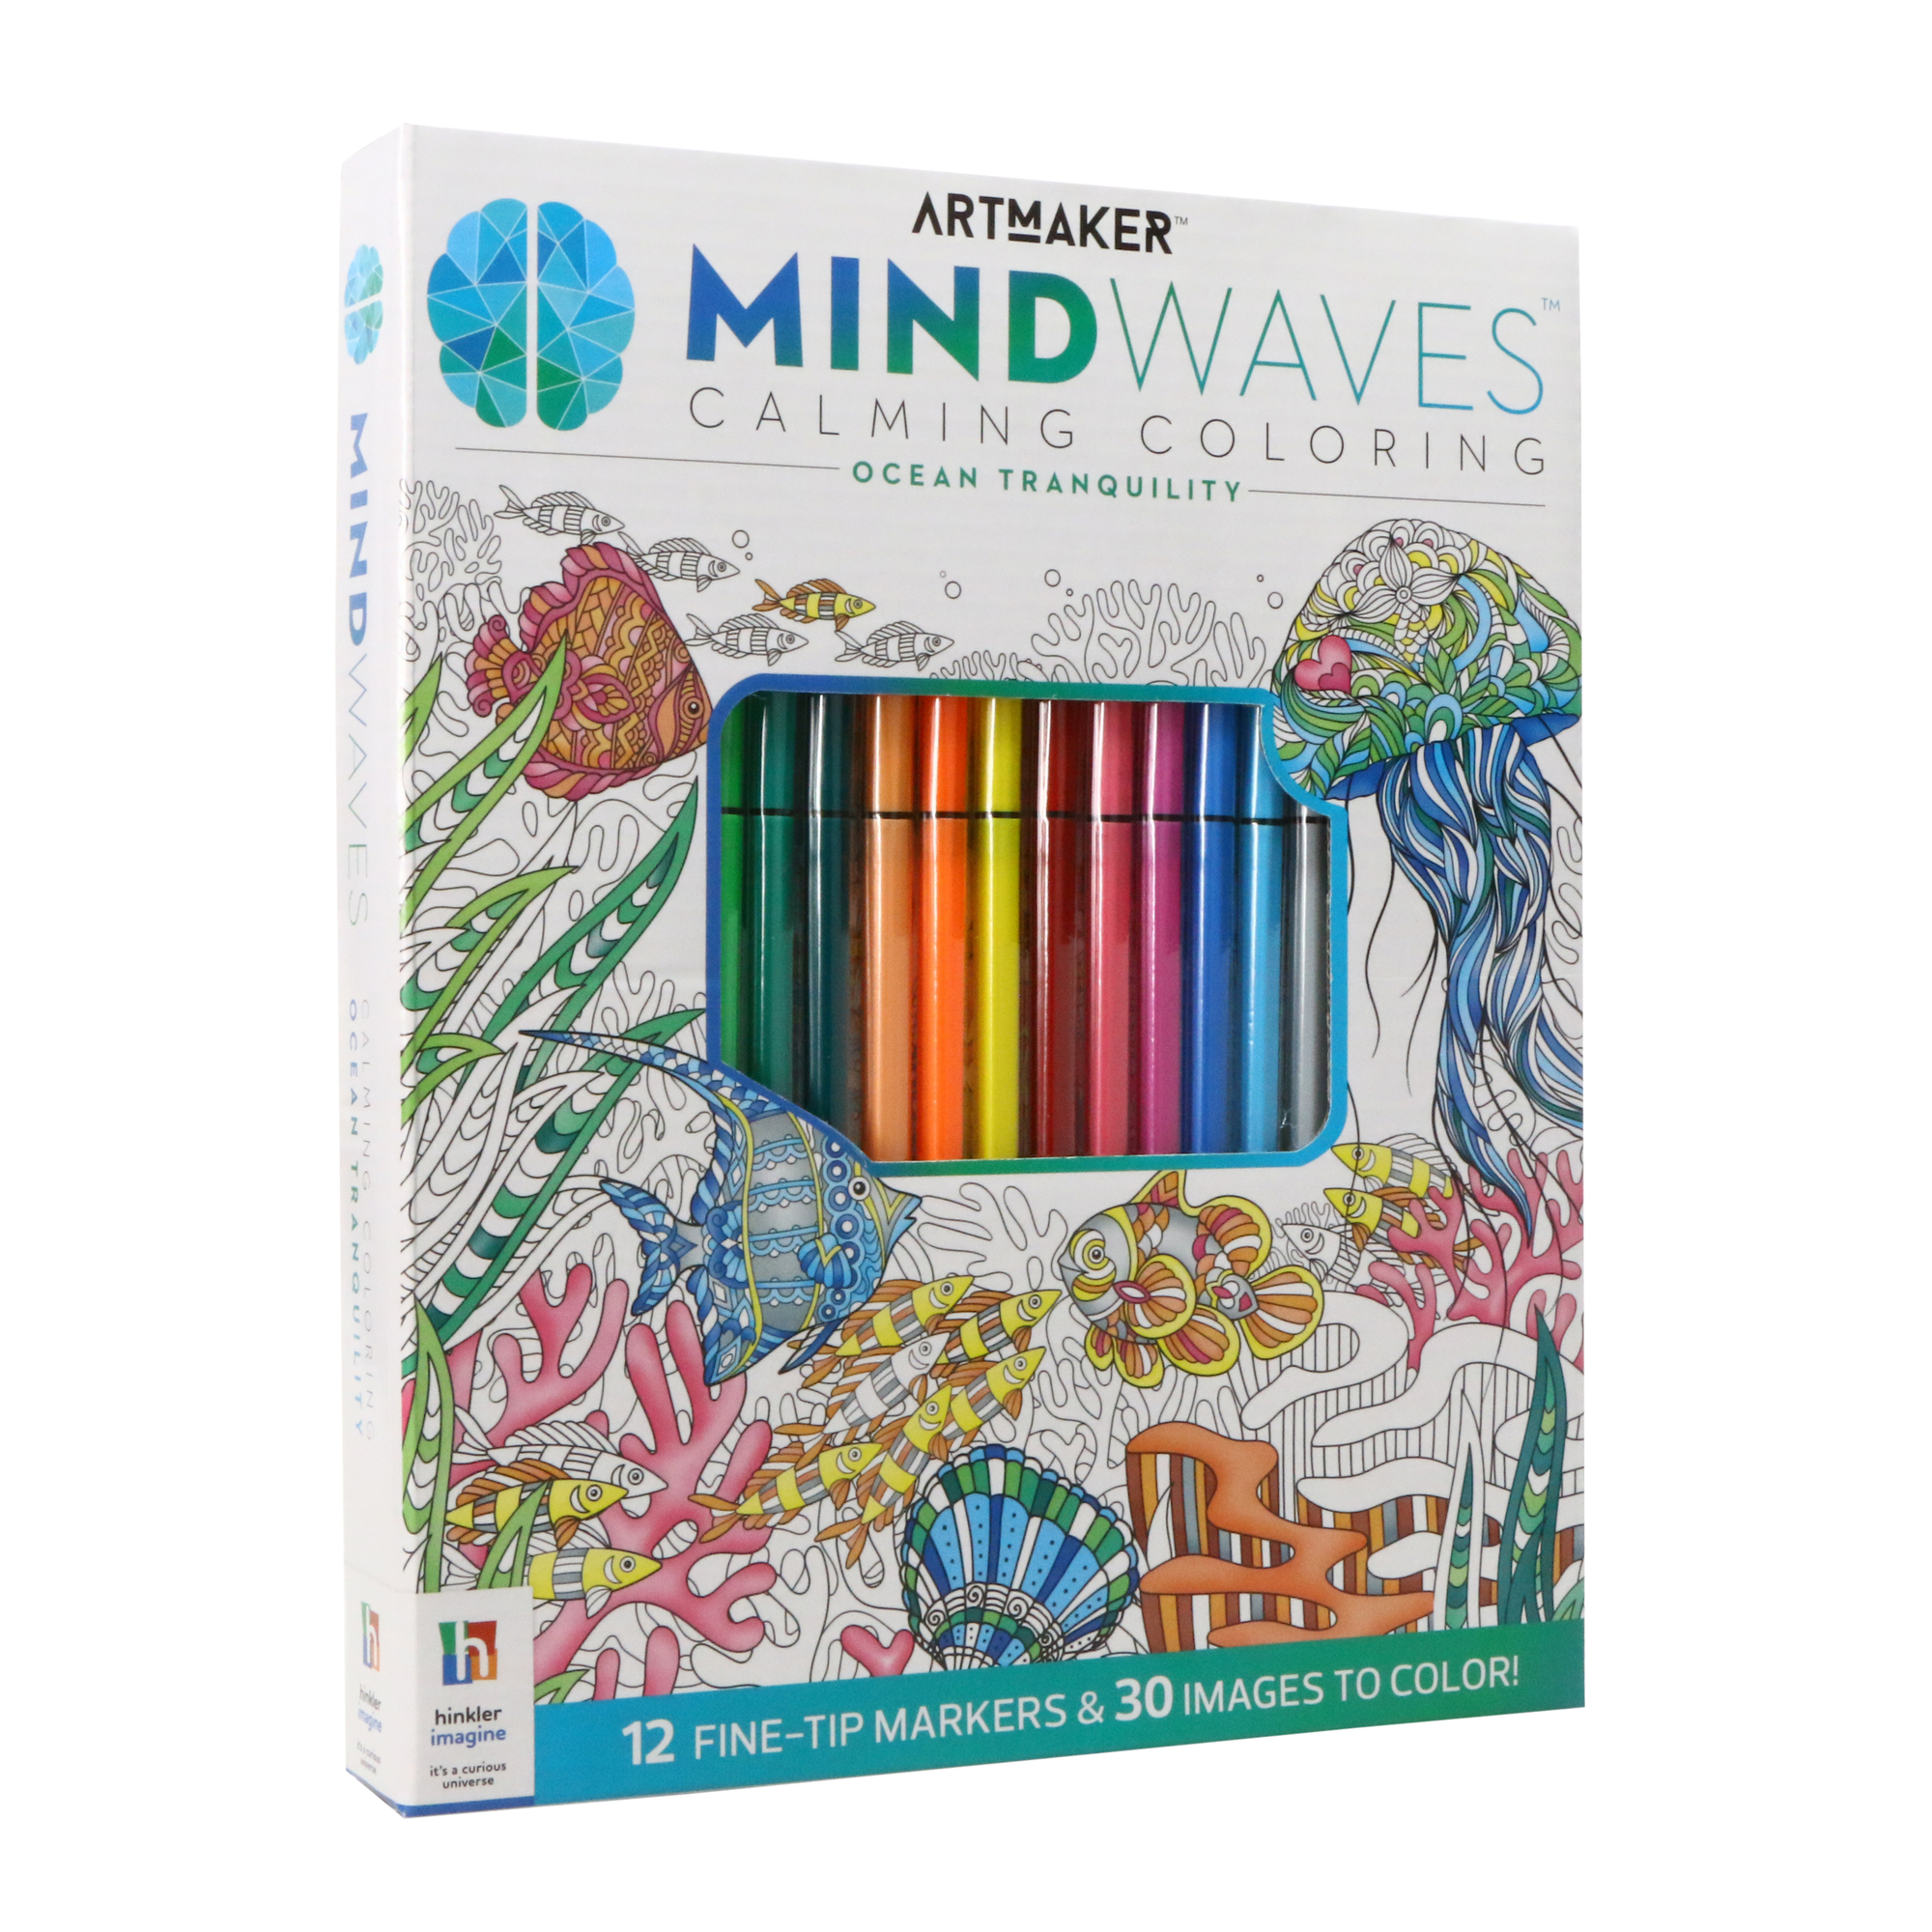 artmaker™ mind waves™ calming coloring set – ocean tranquility